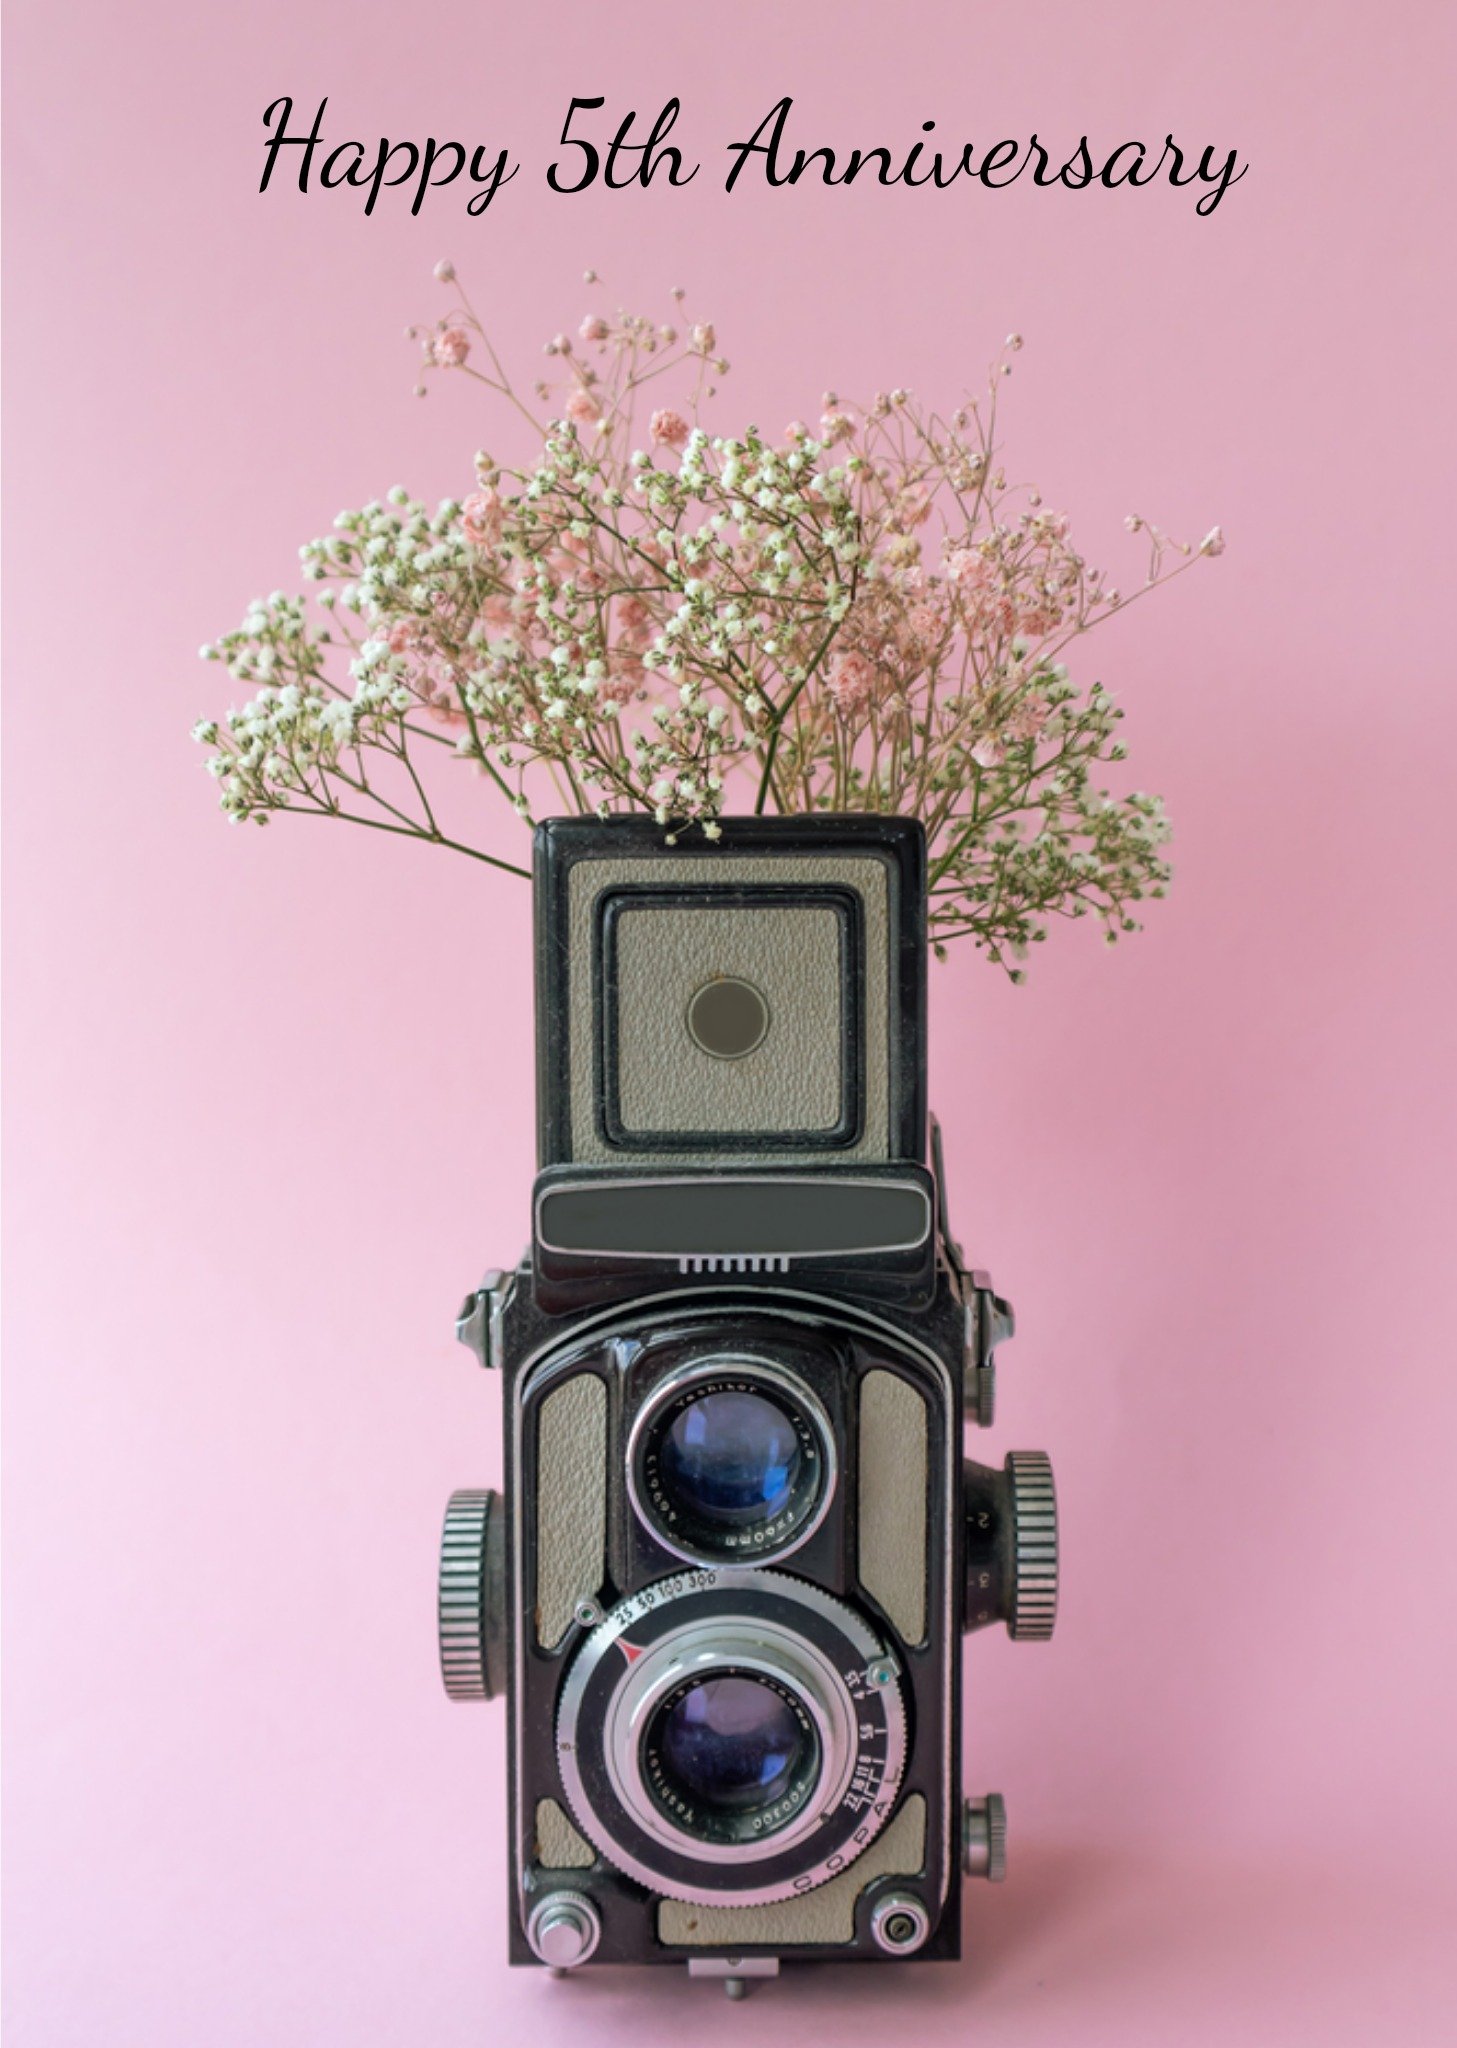 Photoflash - Huwelijkskaart - Jubileum - Oude camera